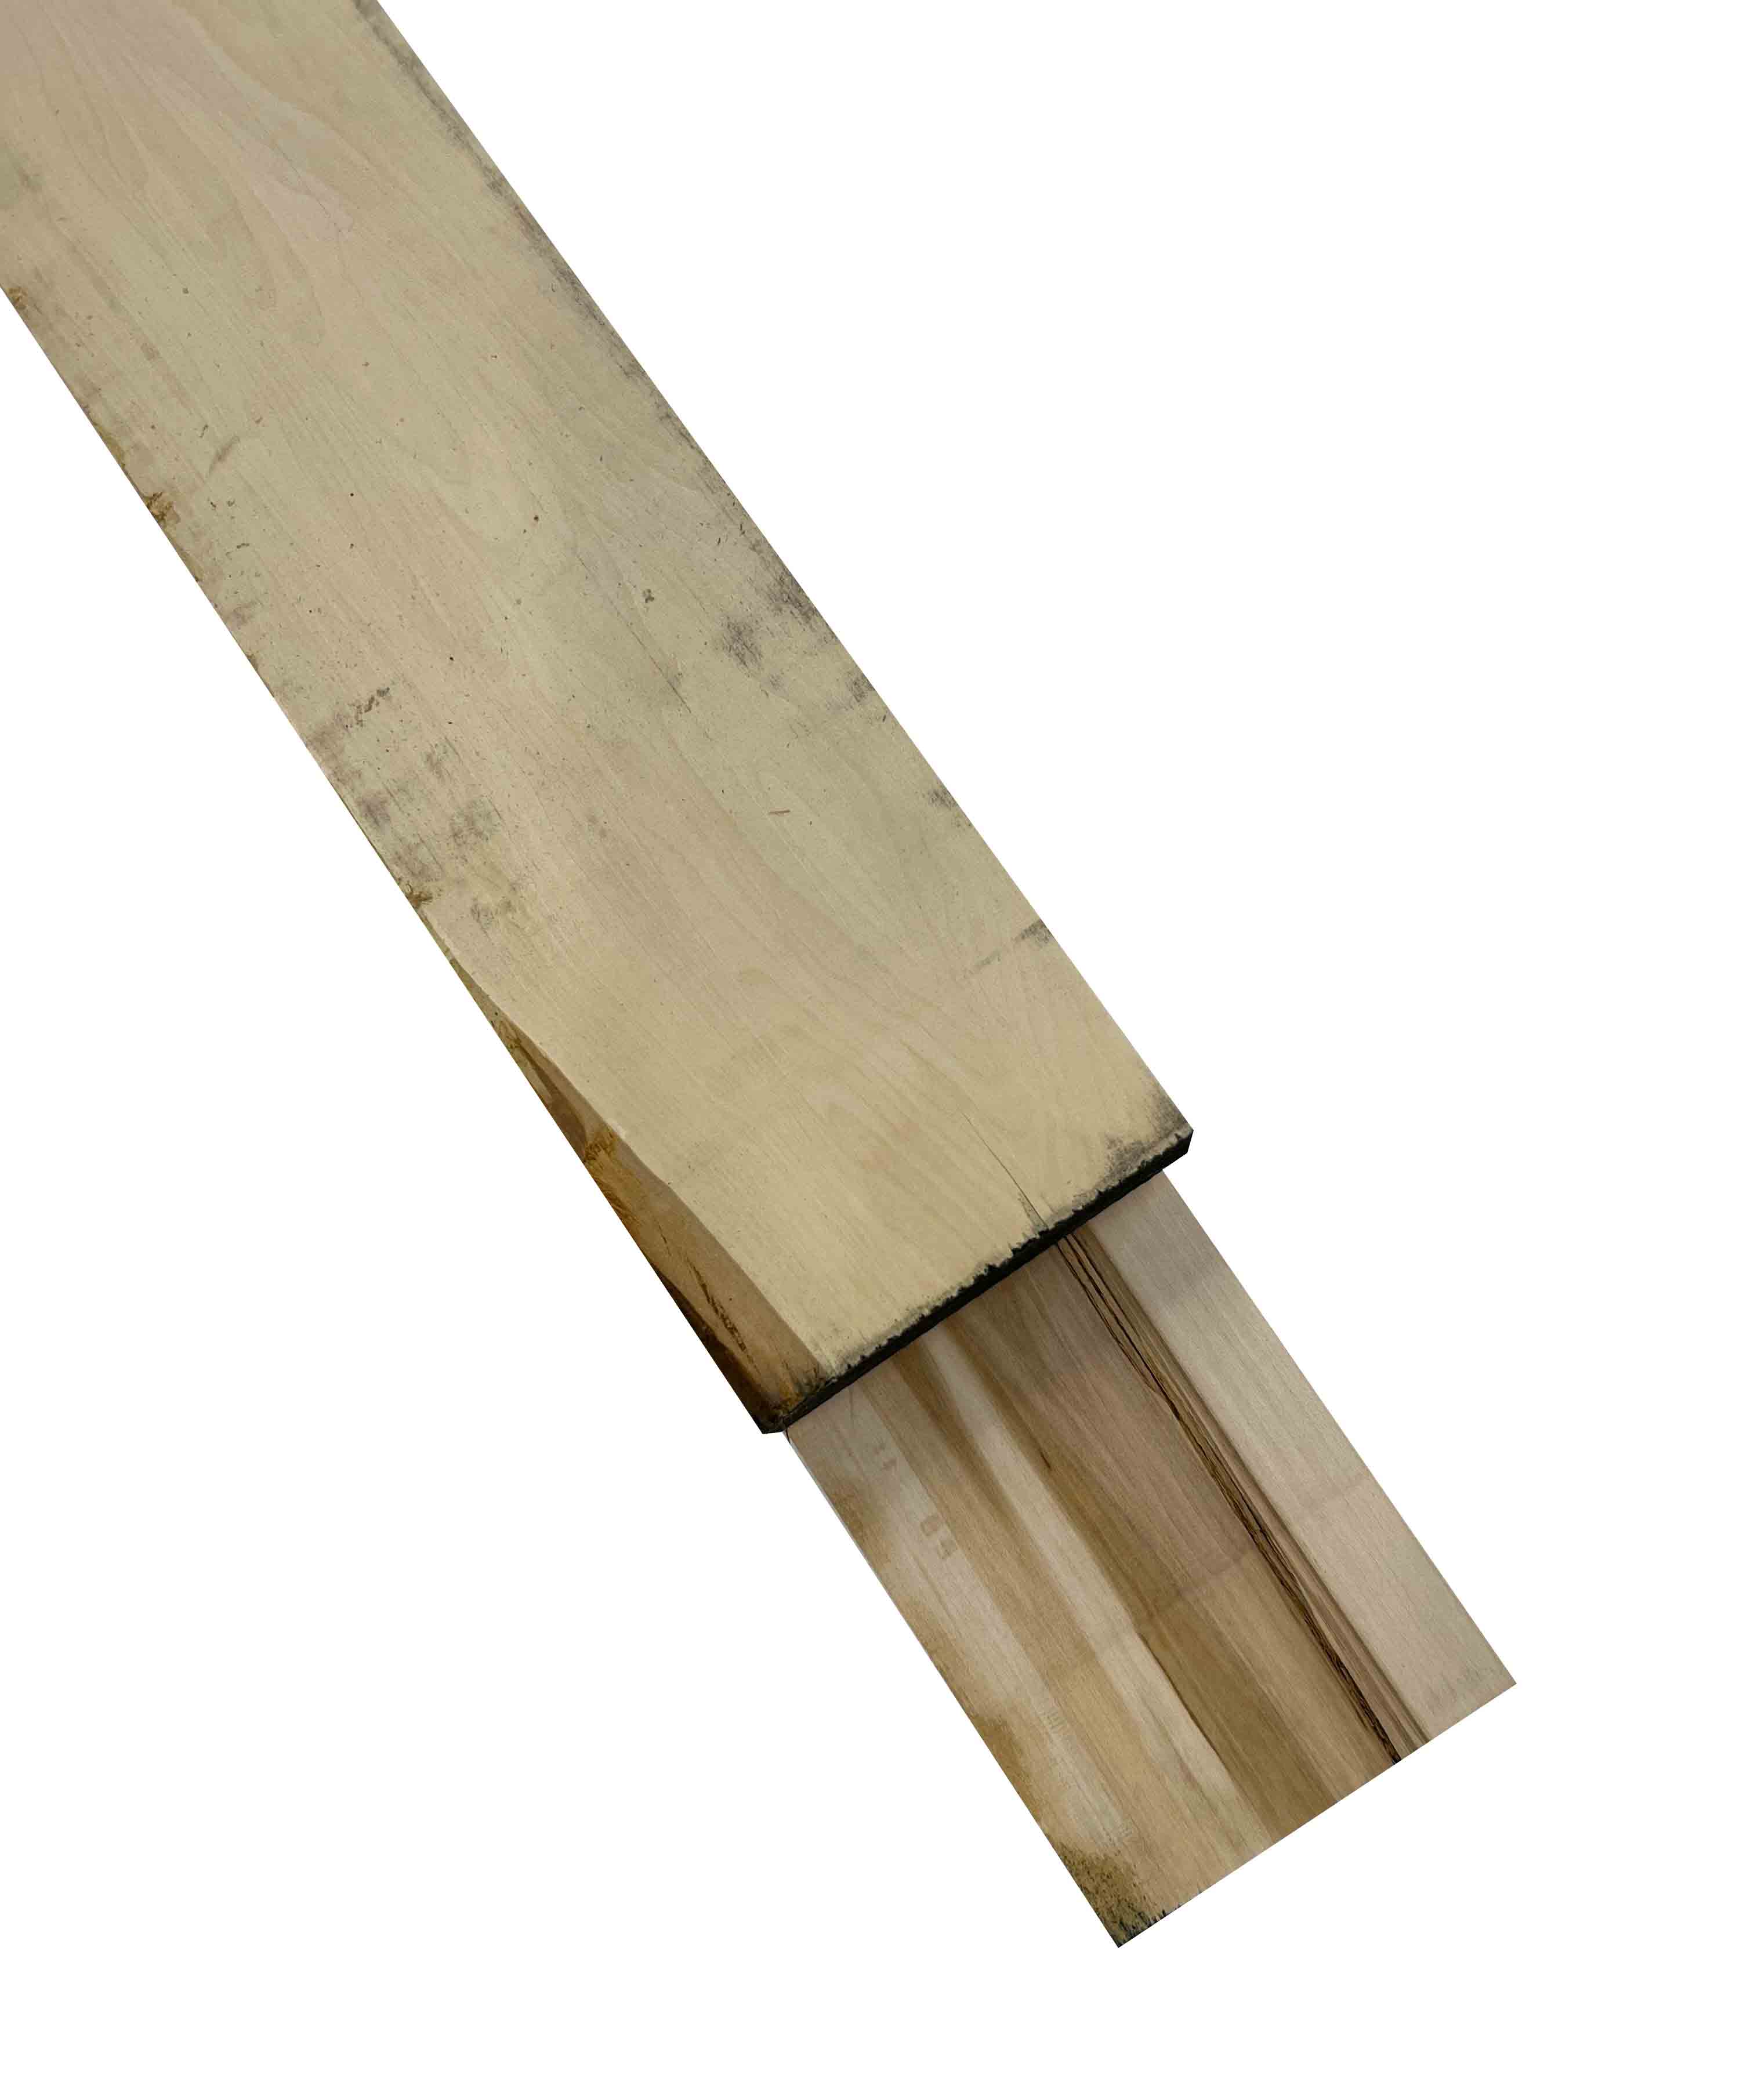 Premium American Hardwood 16/4 Basswood Lumber